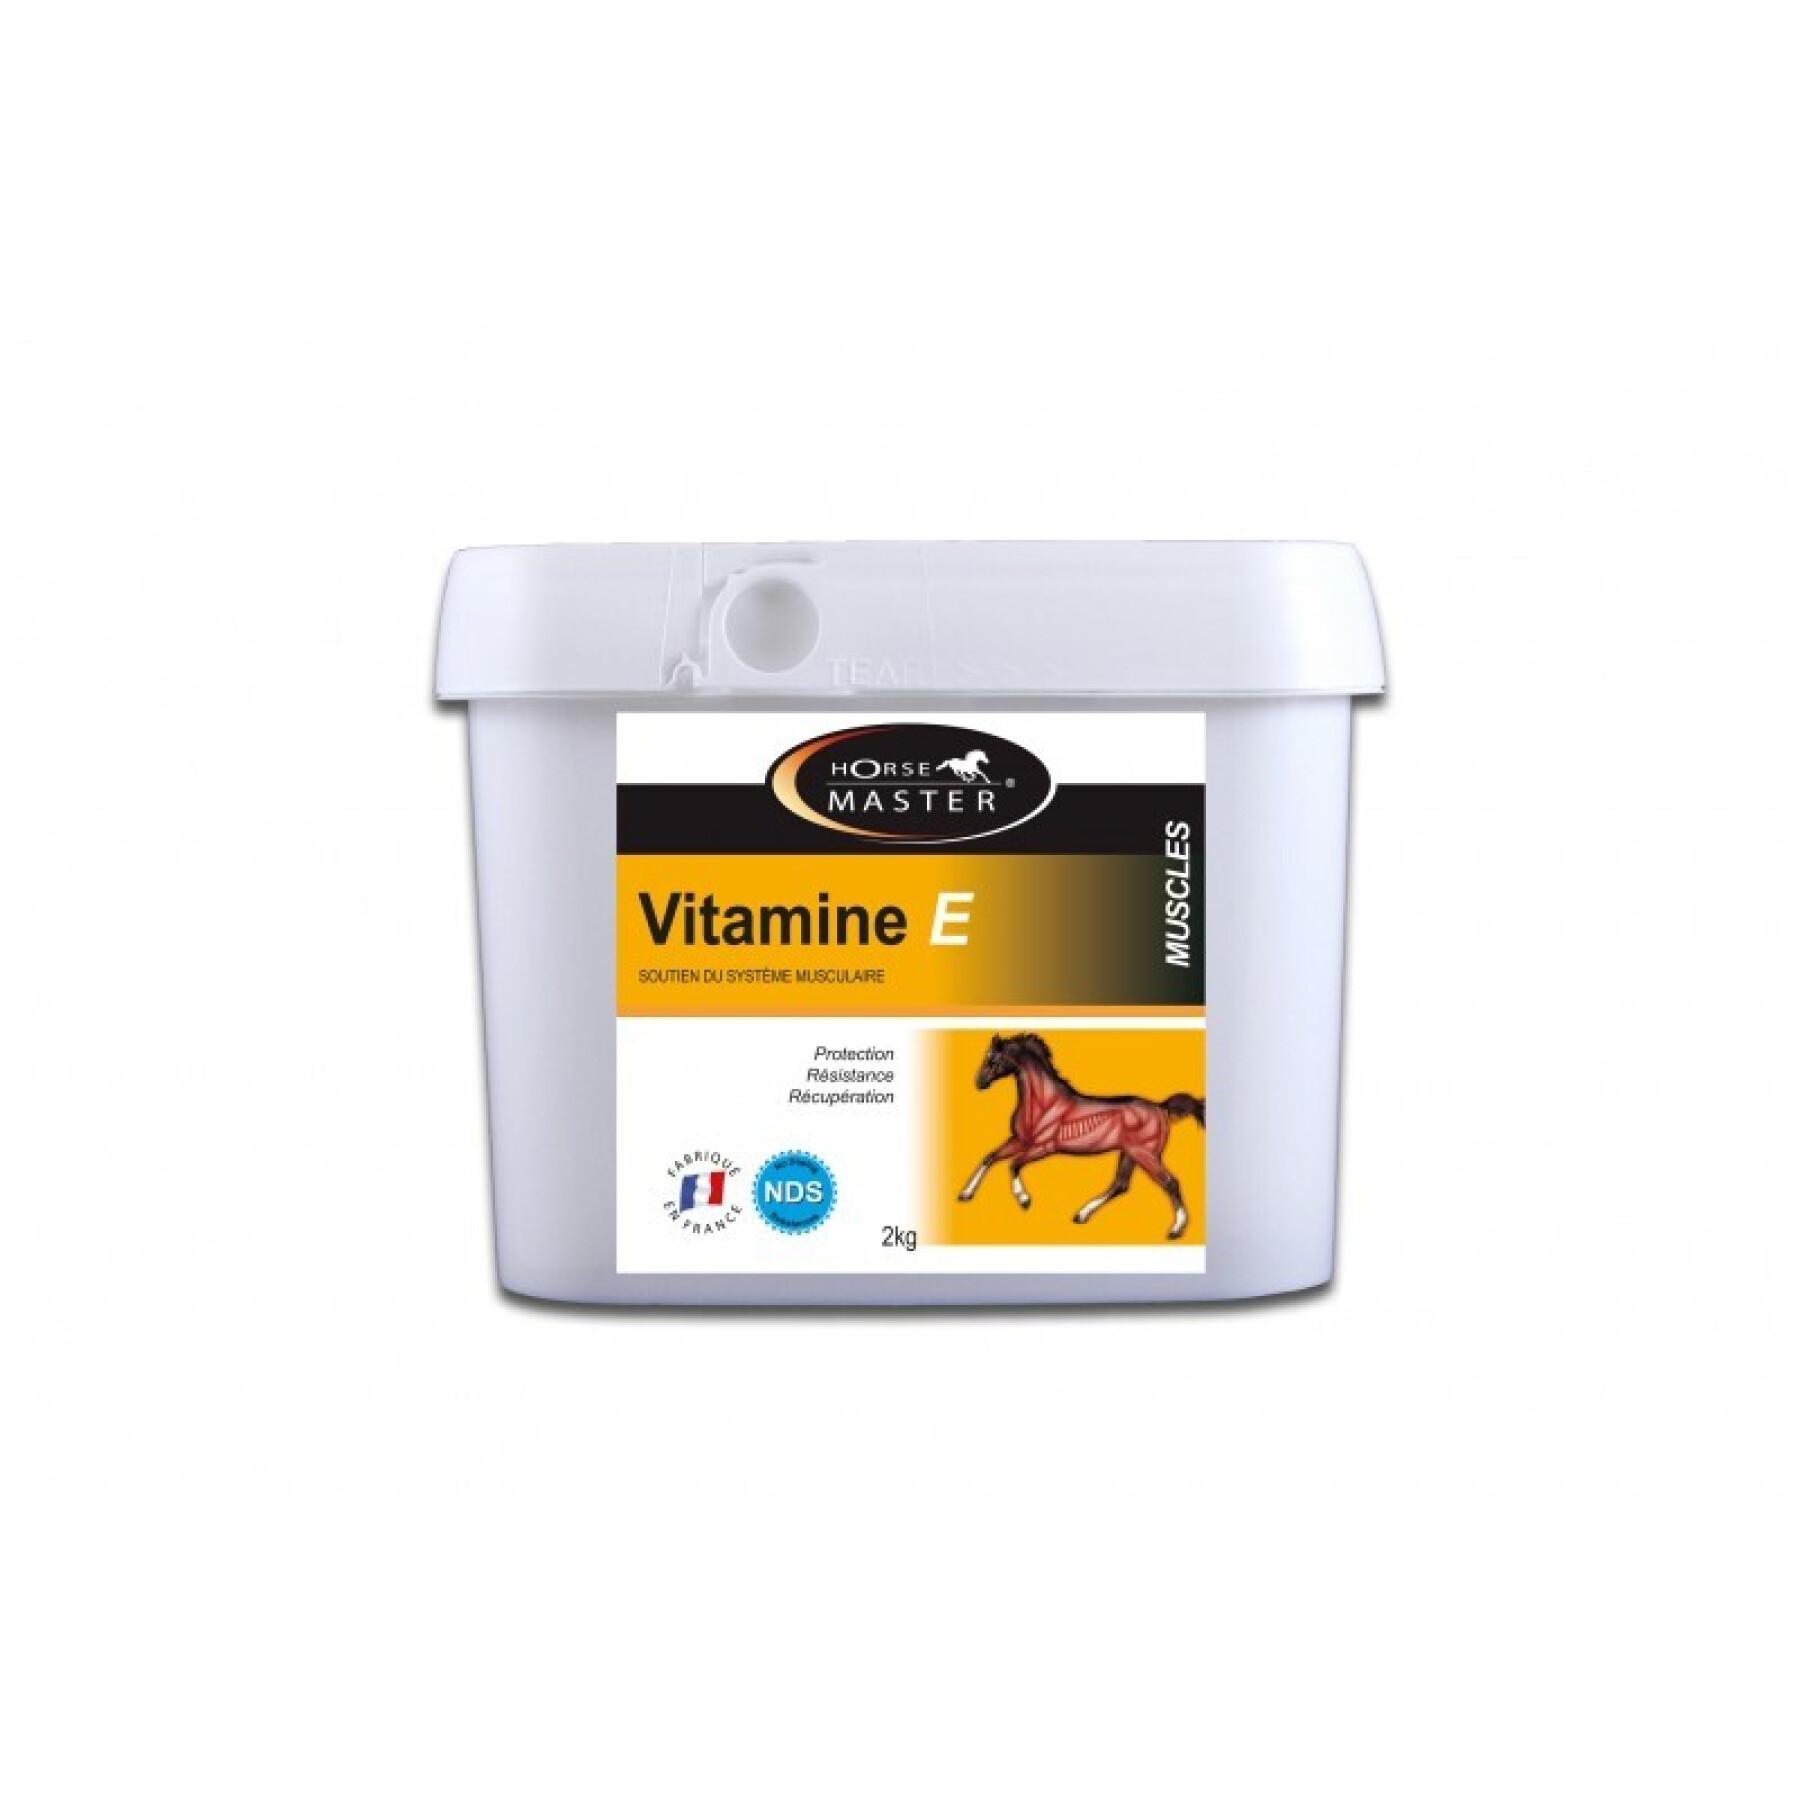 Vitamin e powder for horses Horse Master